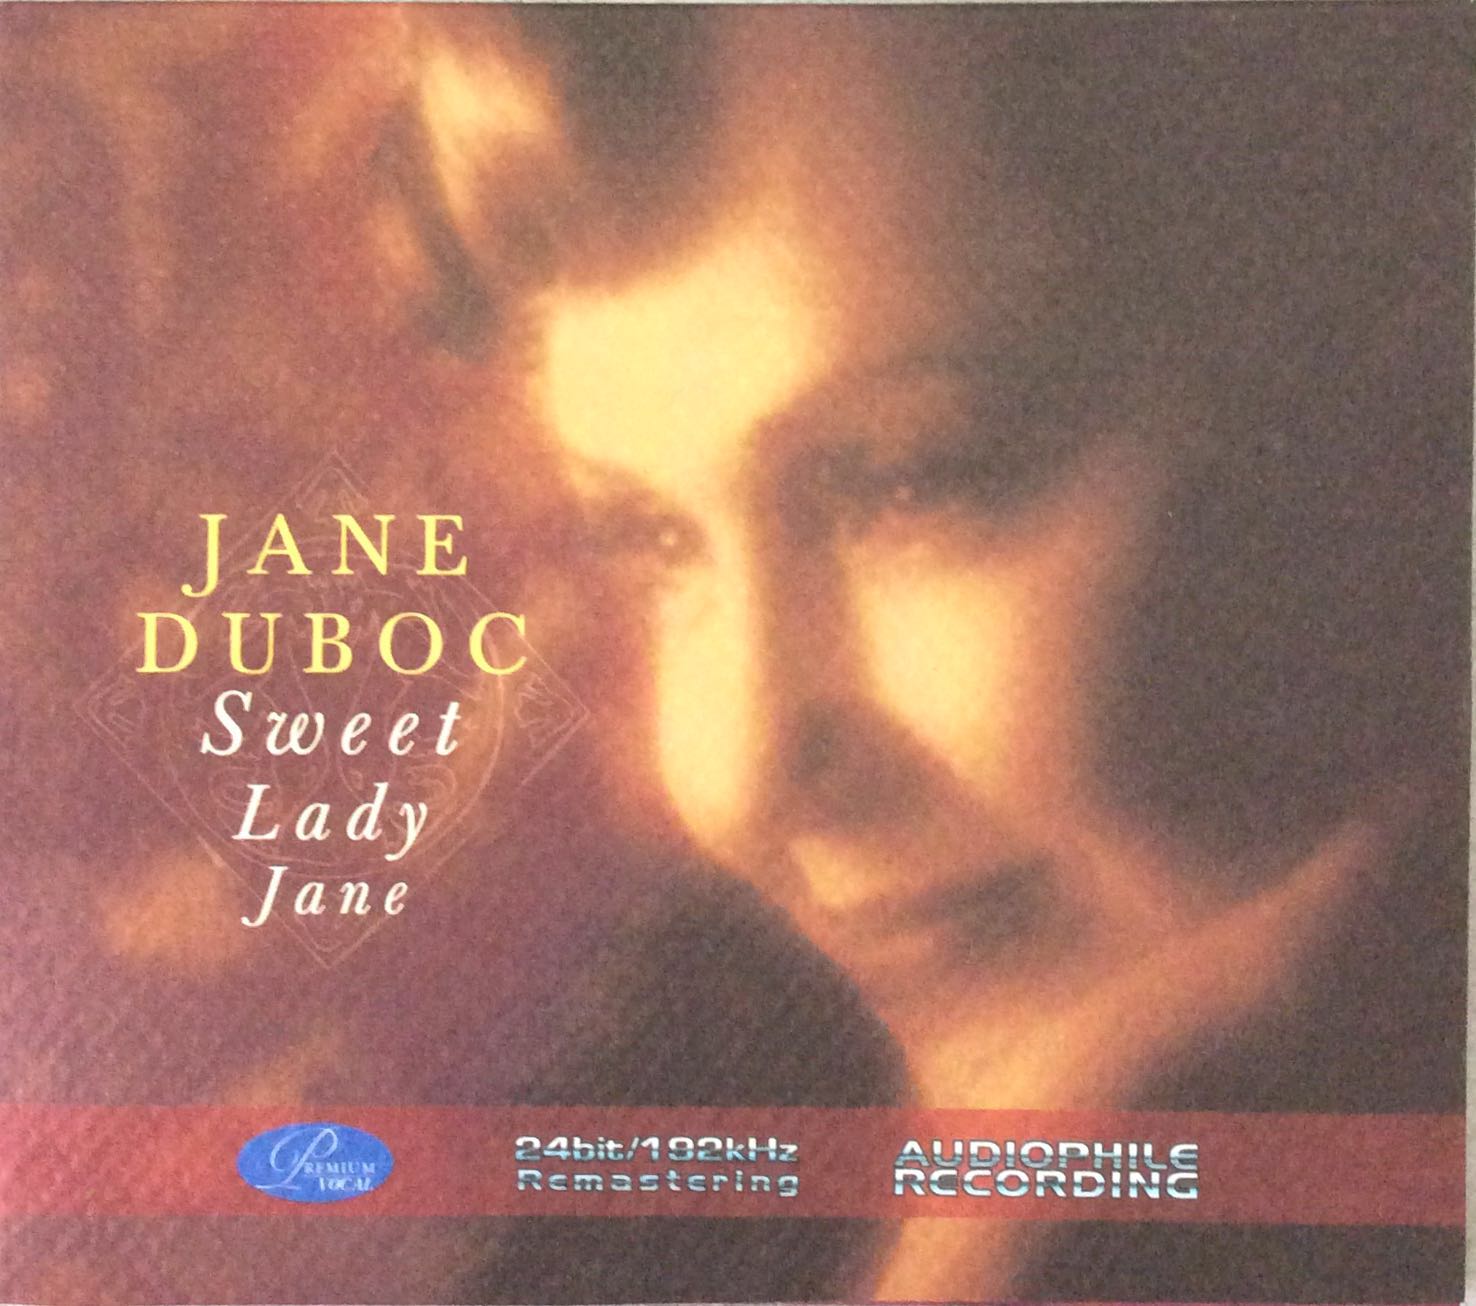 Jane Duboc - SWEET LADY JANE 24bit 192kHz Remastering Audiophile CD